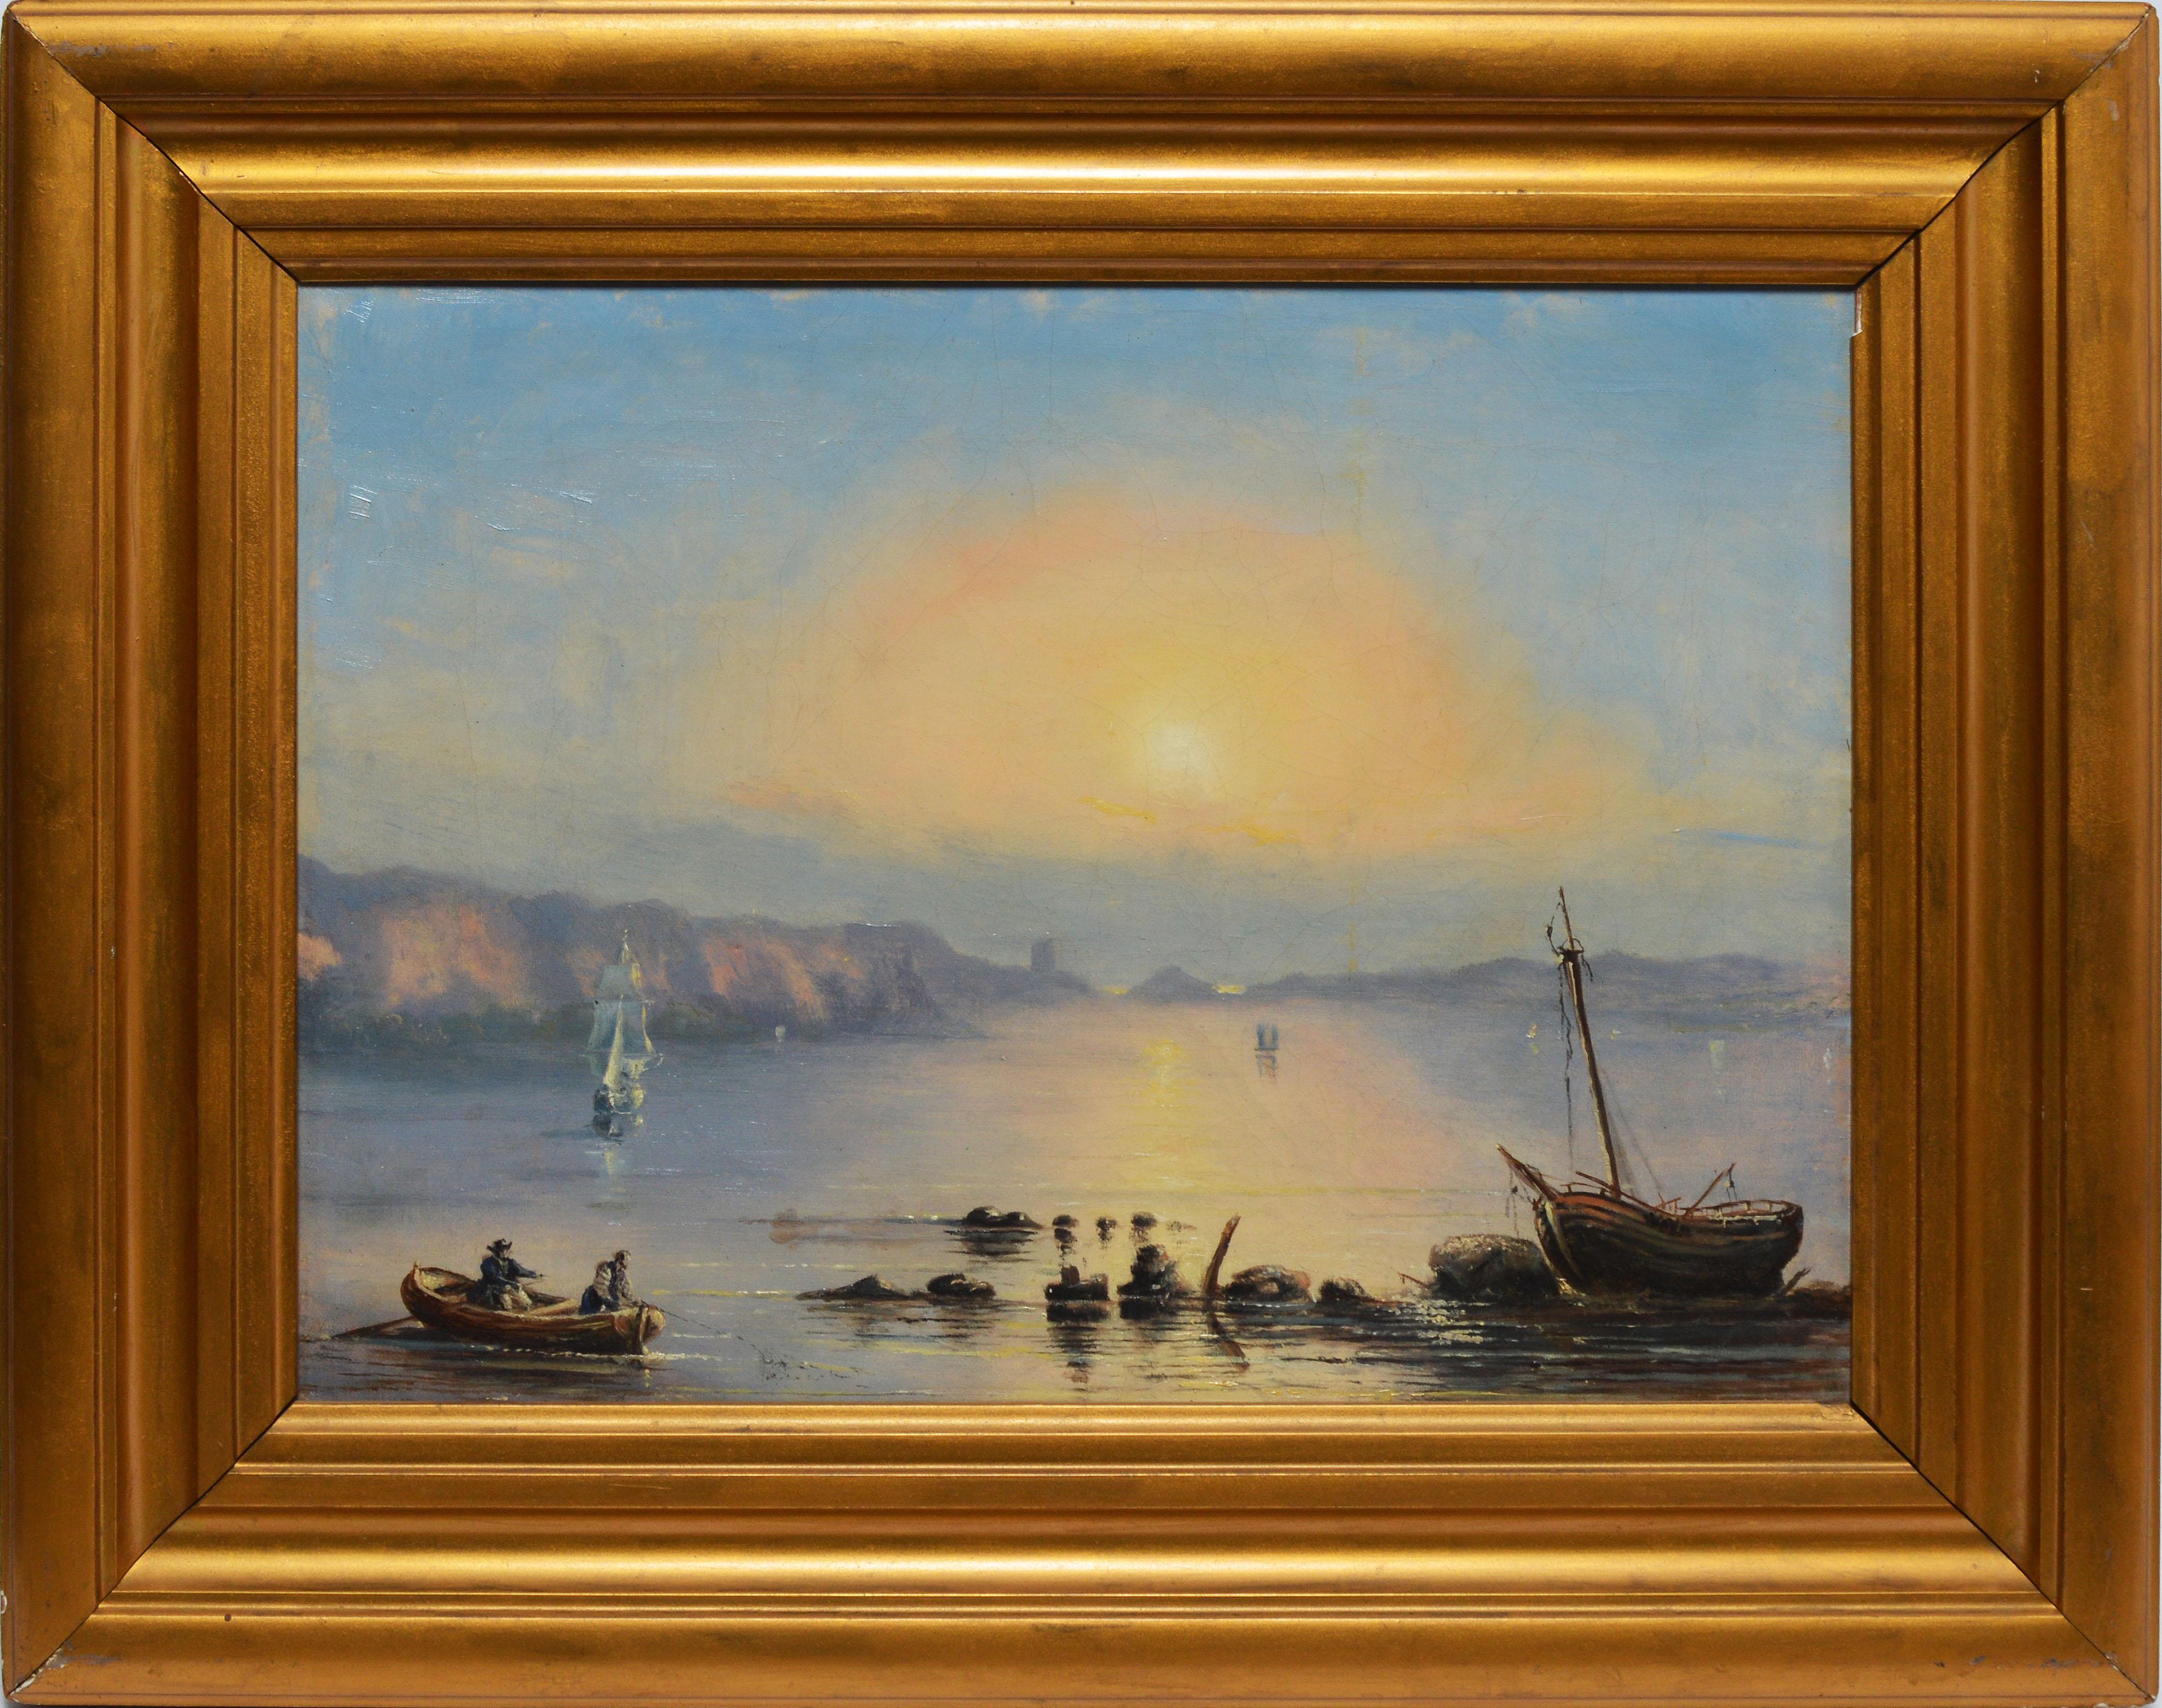 Unknown Landscape Painting - 19th Century Luminous Coastal Sunset Landscape Oil Painting